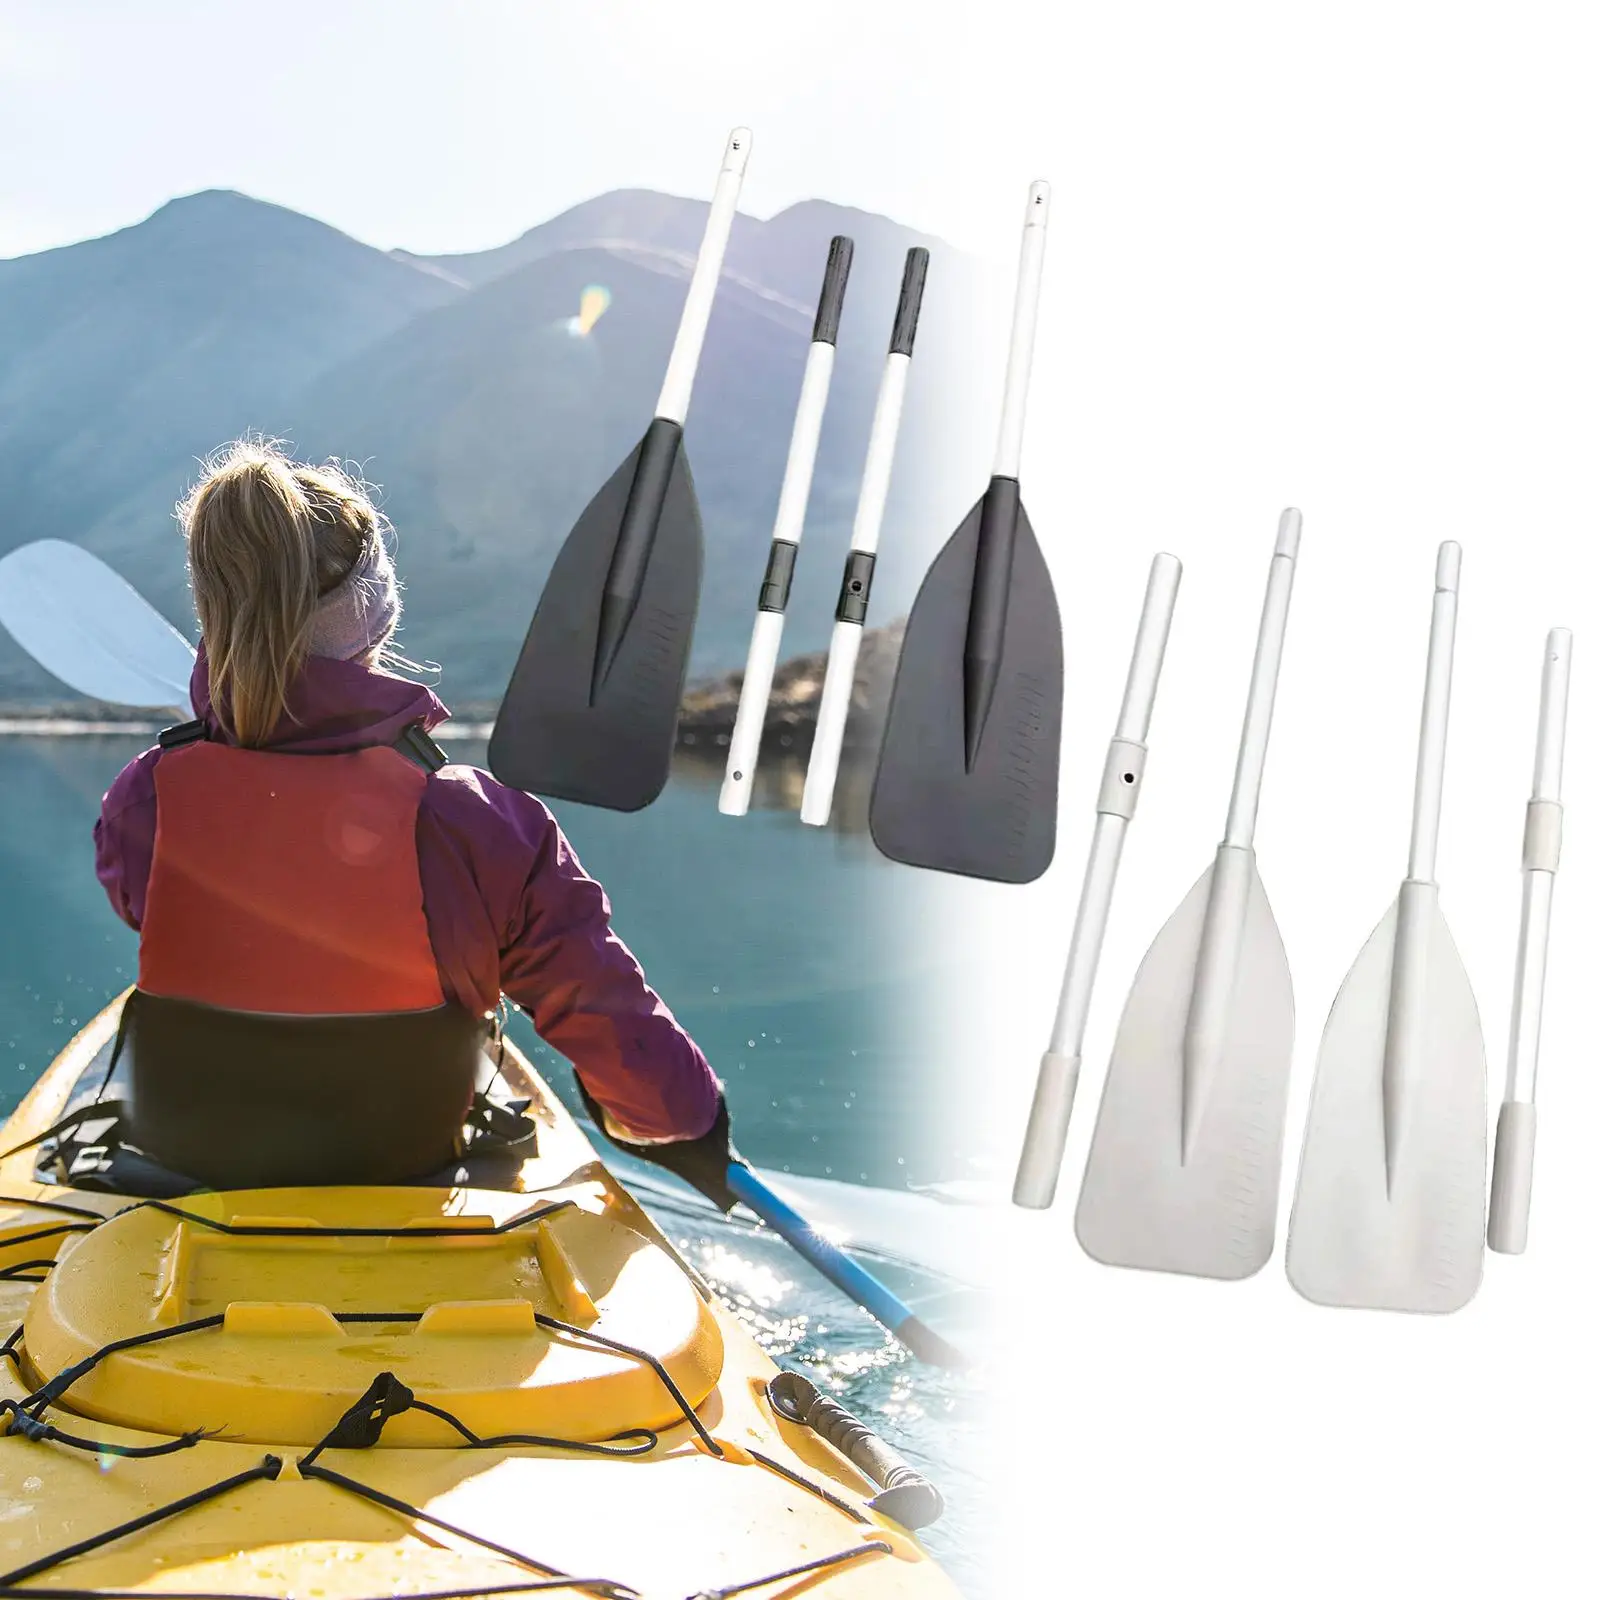 2Pcs Kayak Paddle Detachable Lightweight Accessories Durable Supplies Portable